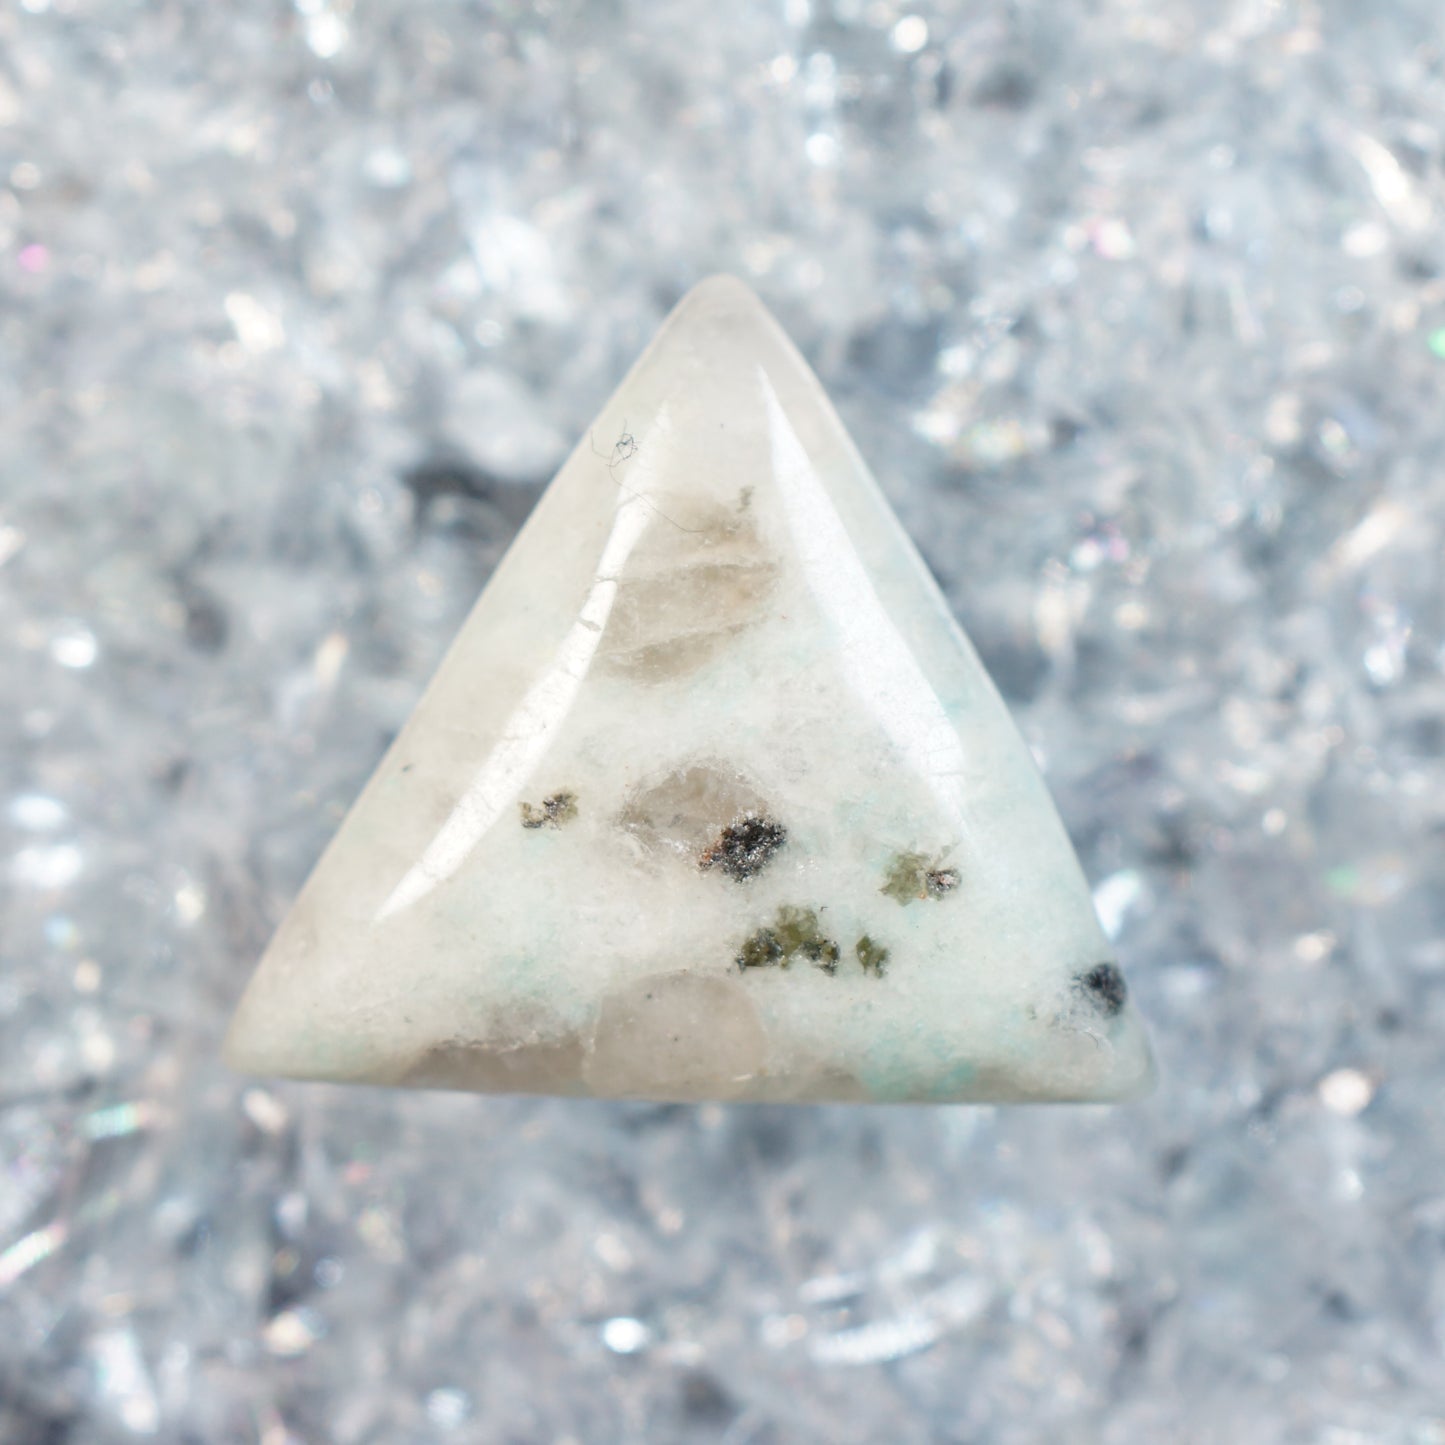 Kiwi Stone - Puffed Triangle